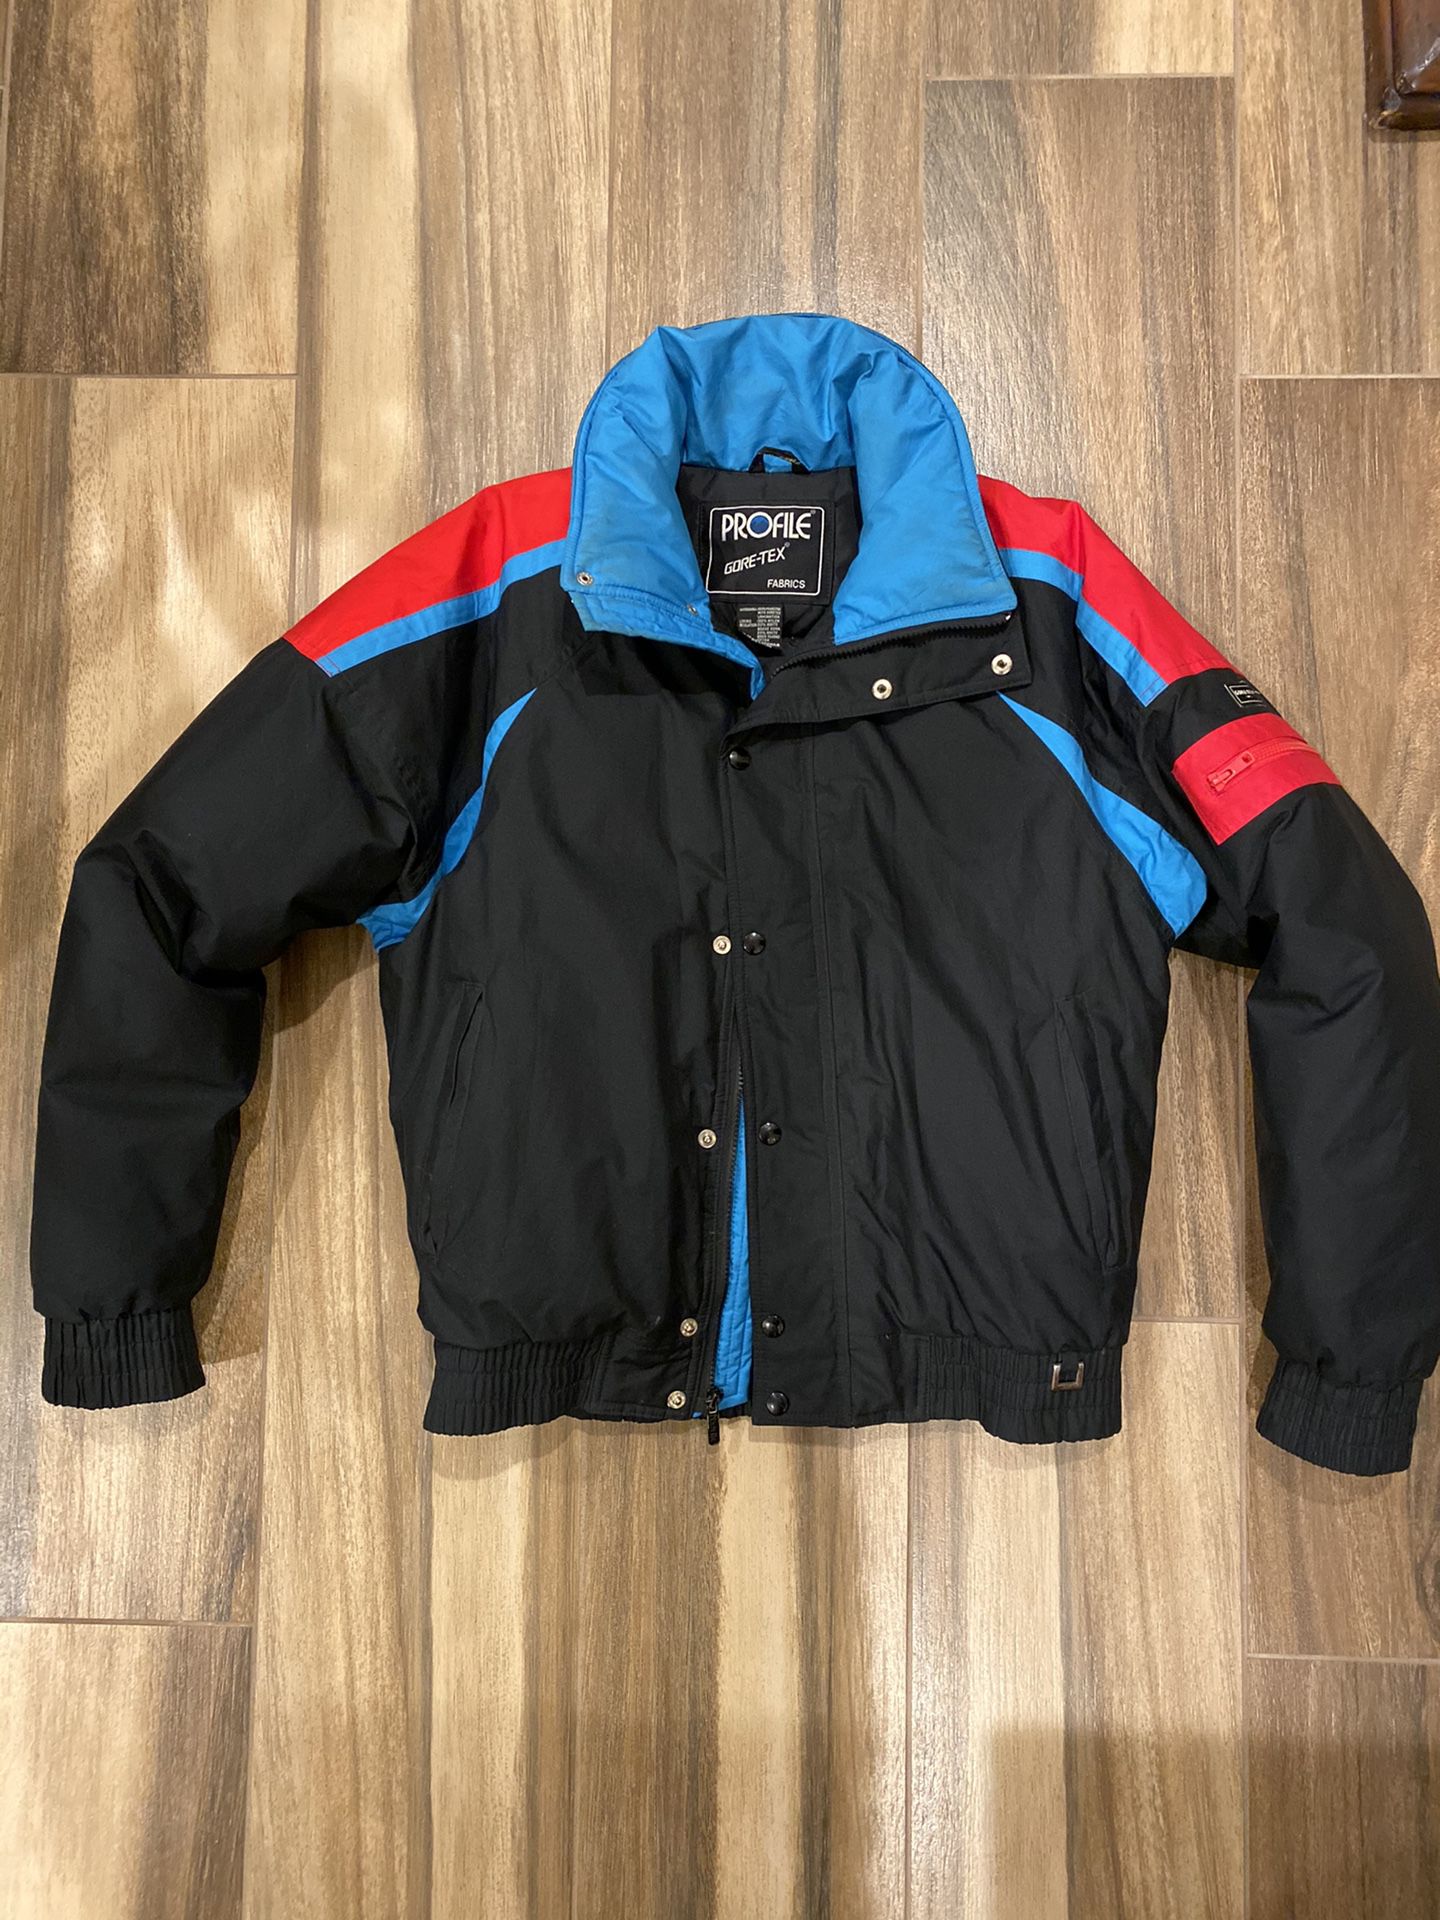 Vintage Gore-Tex By profile Men’s Winter Ski Snowmobile Jacket Waterproof. WARM Size M